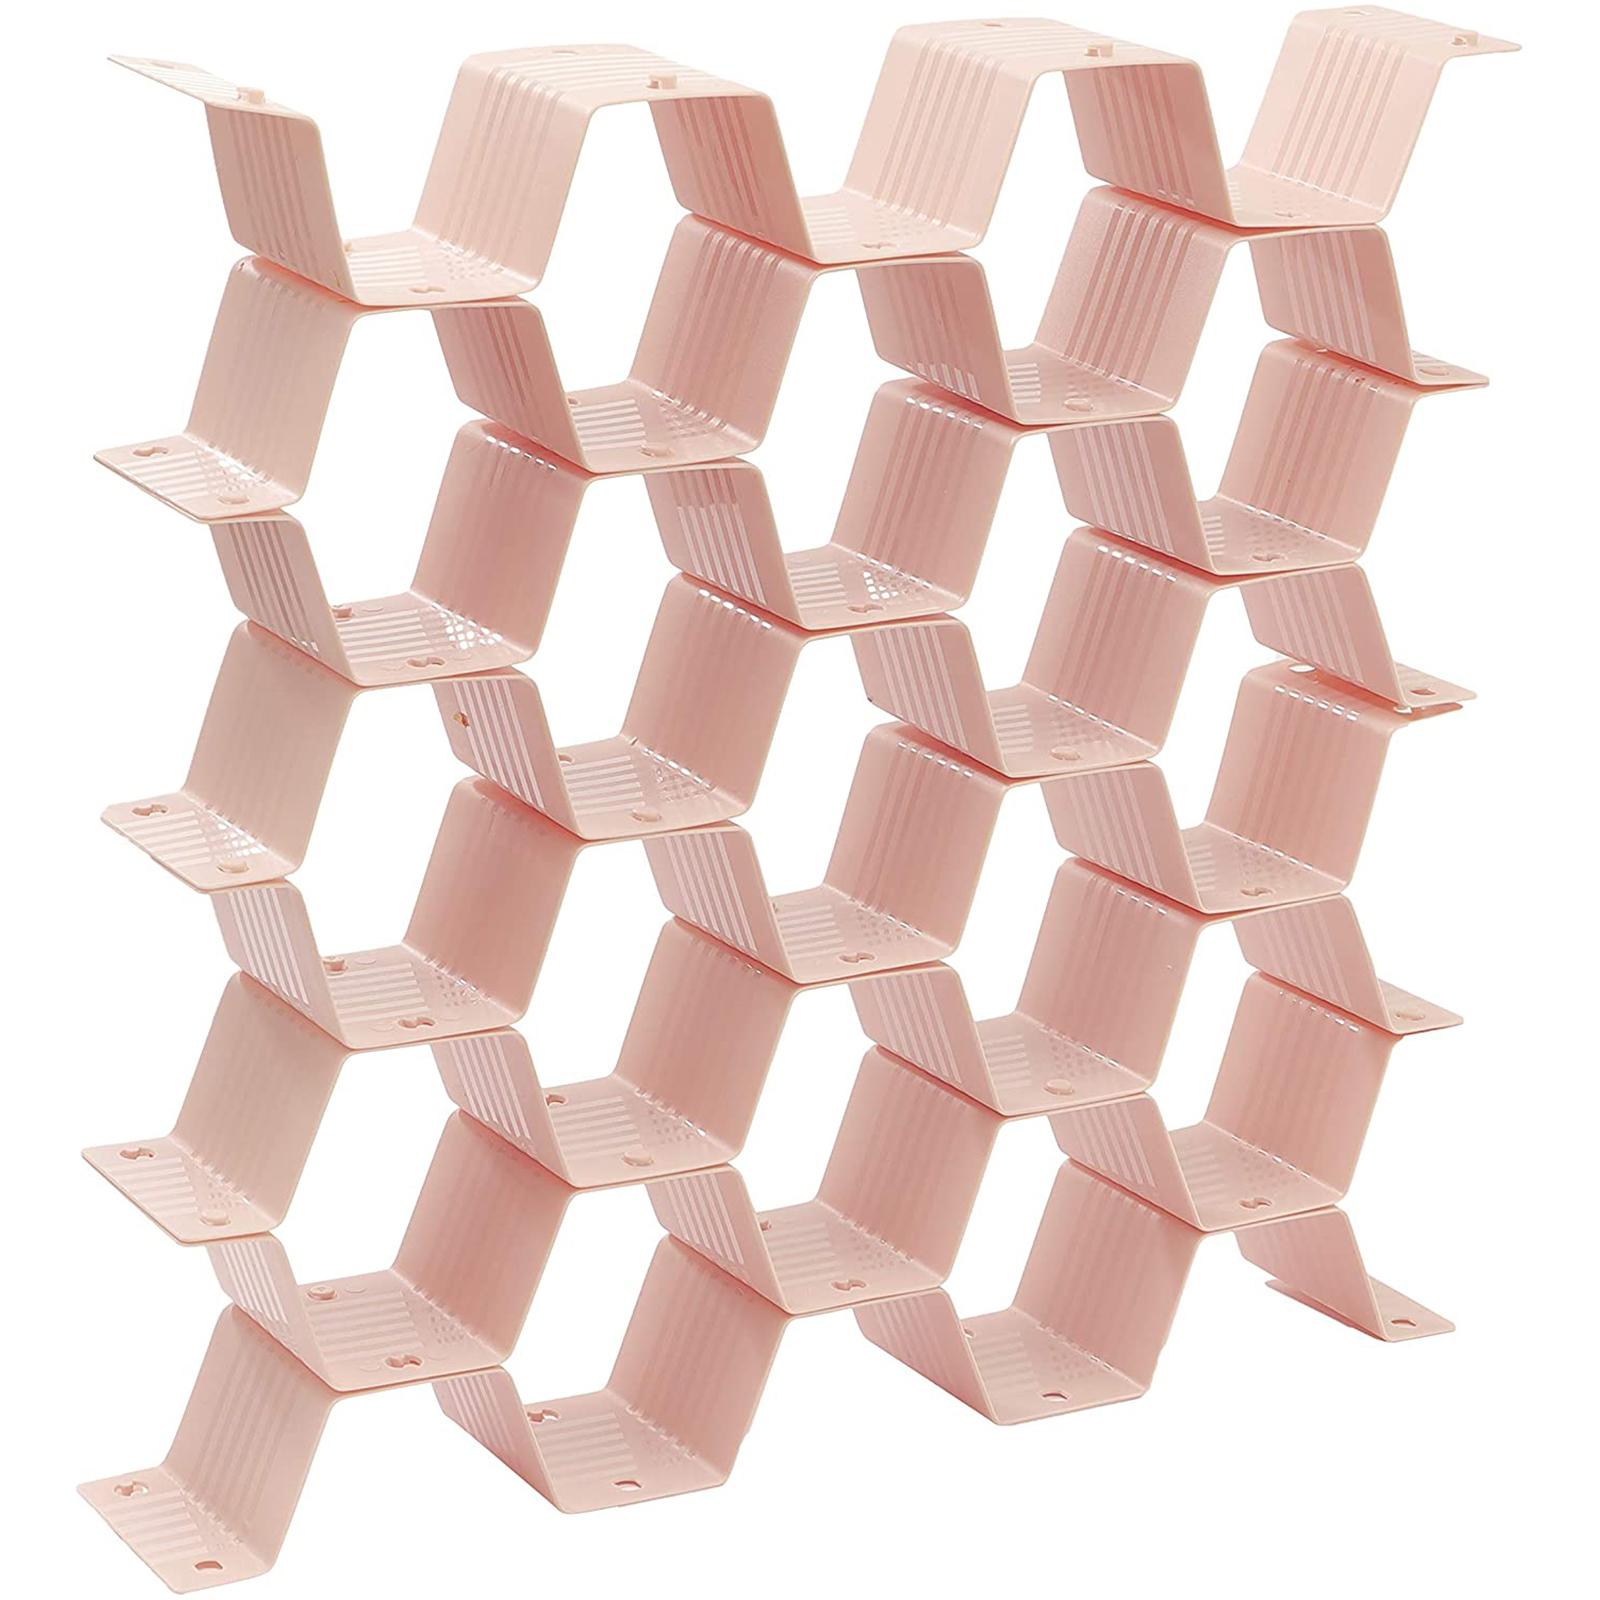 Honeycomb Cells Drawer Underwear Grid Box Clapboard Partition